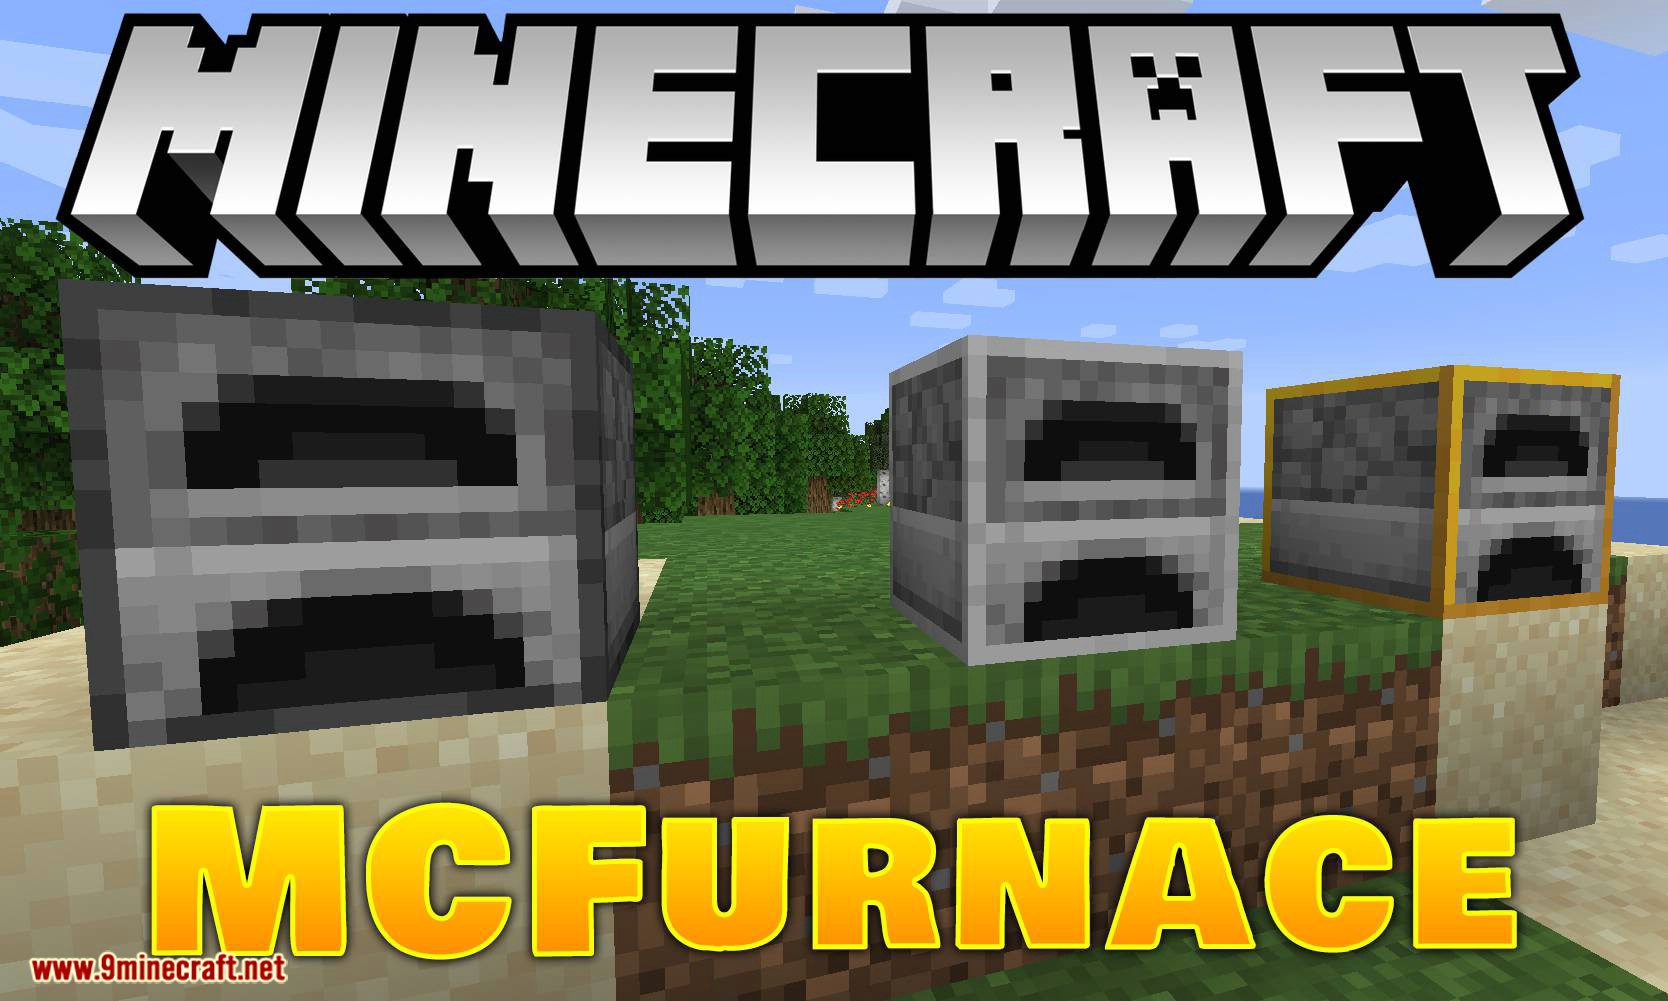 MCFurnace mod for minecraft logo